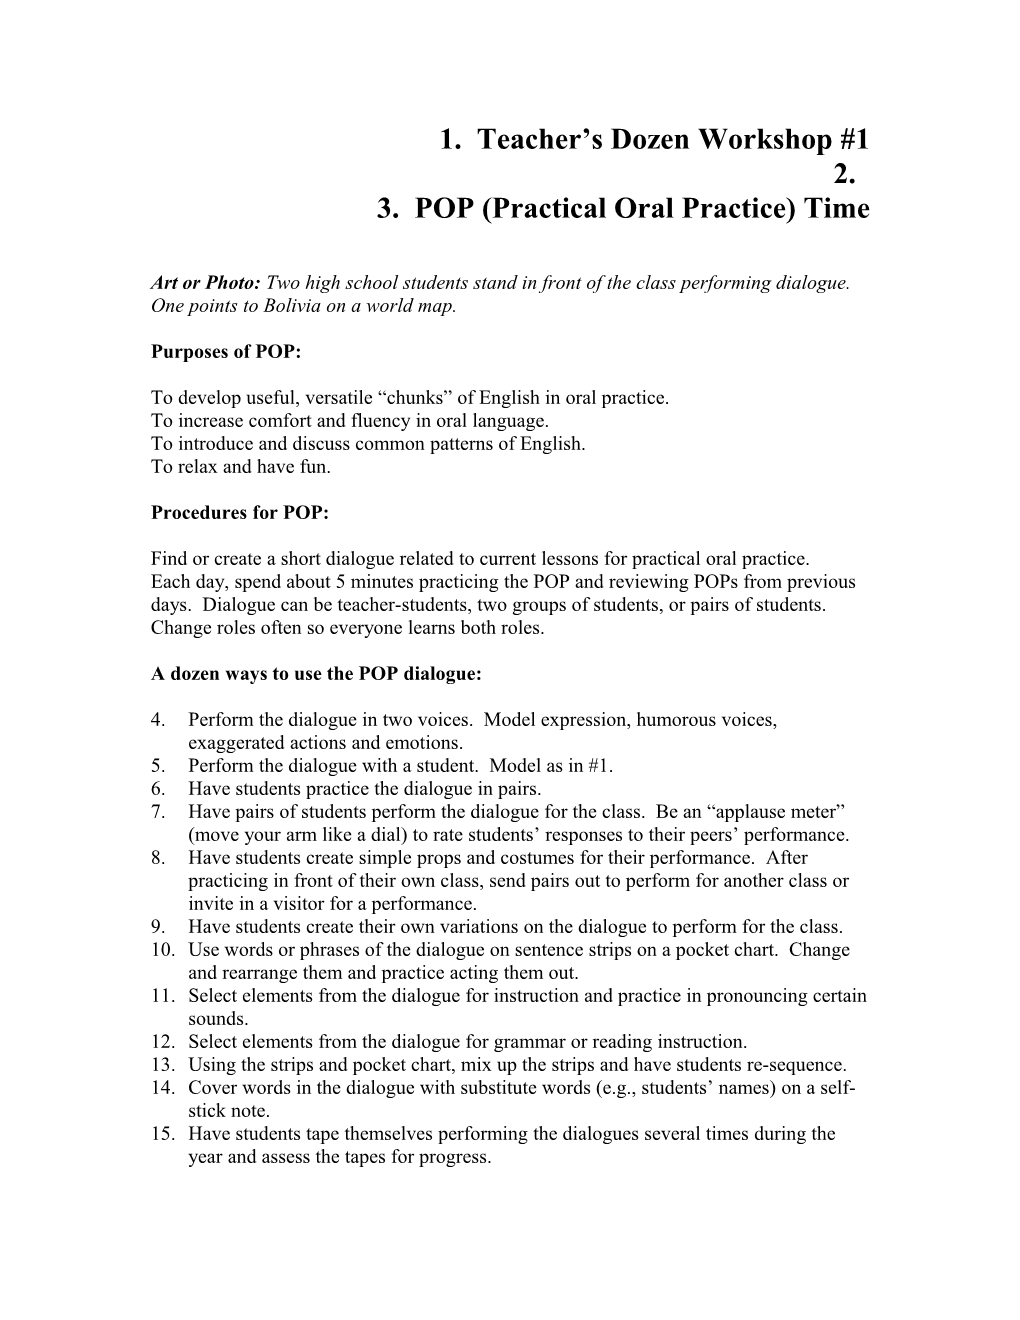 POP (Practical Oral Practice) Time